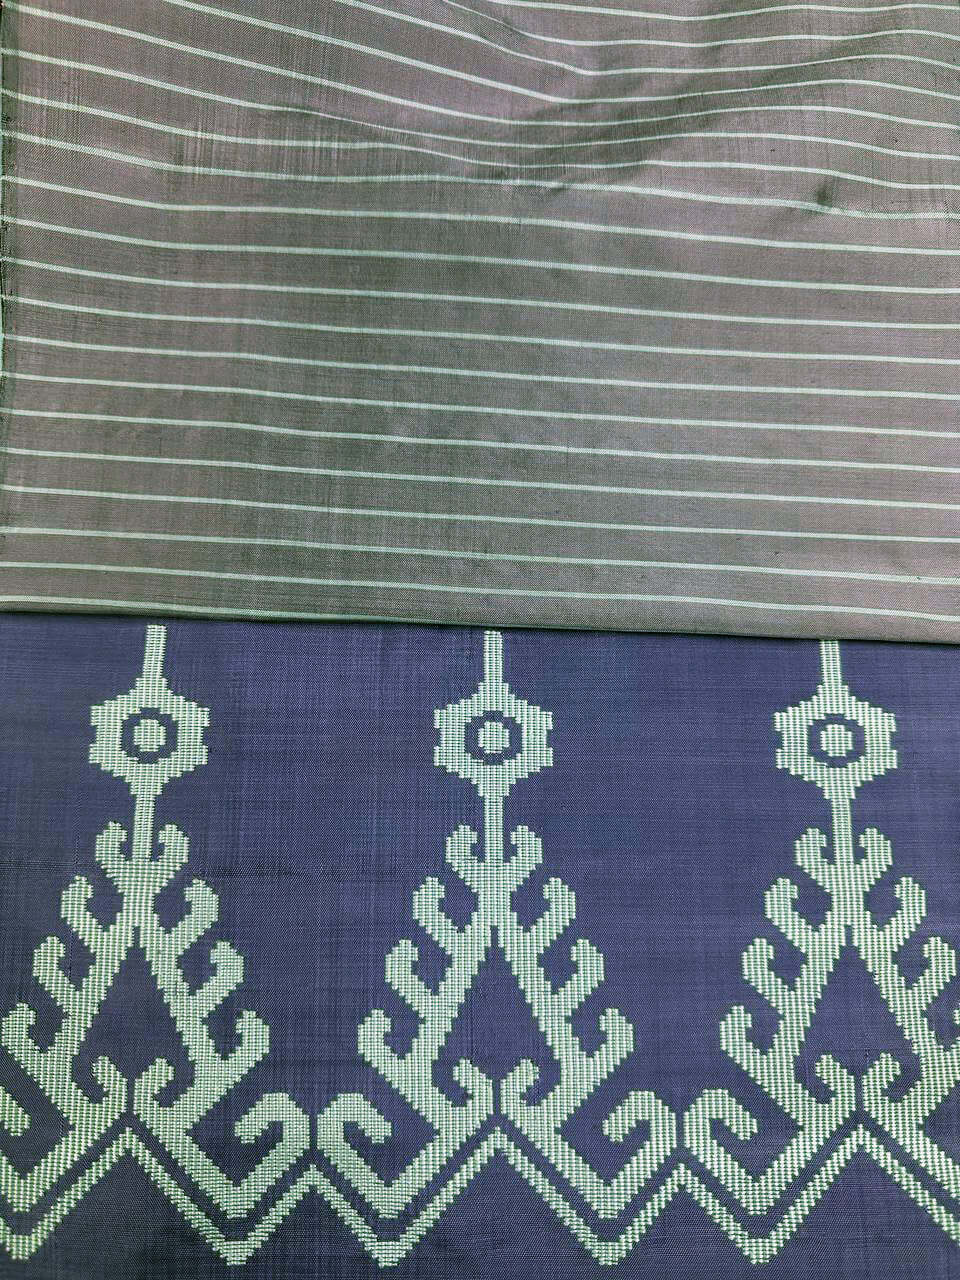 Iban Rebung(Lilic) handwoven silk songket shawl textile